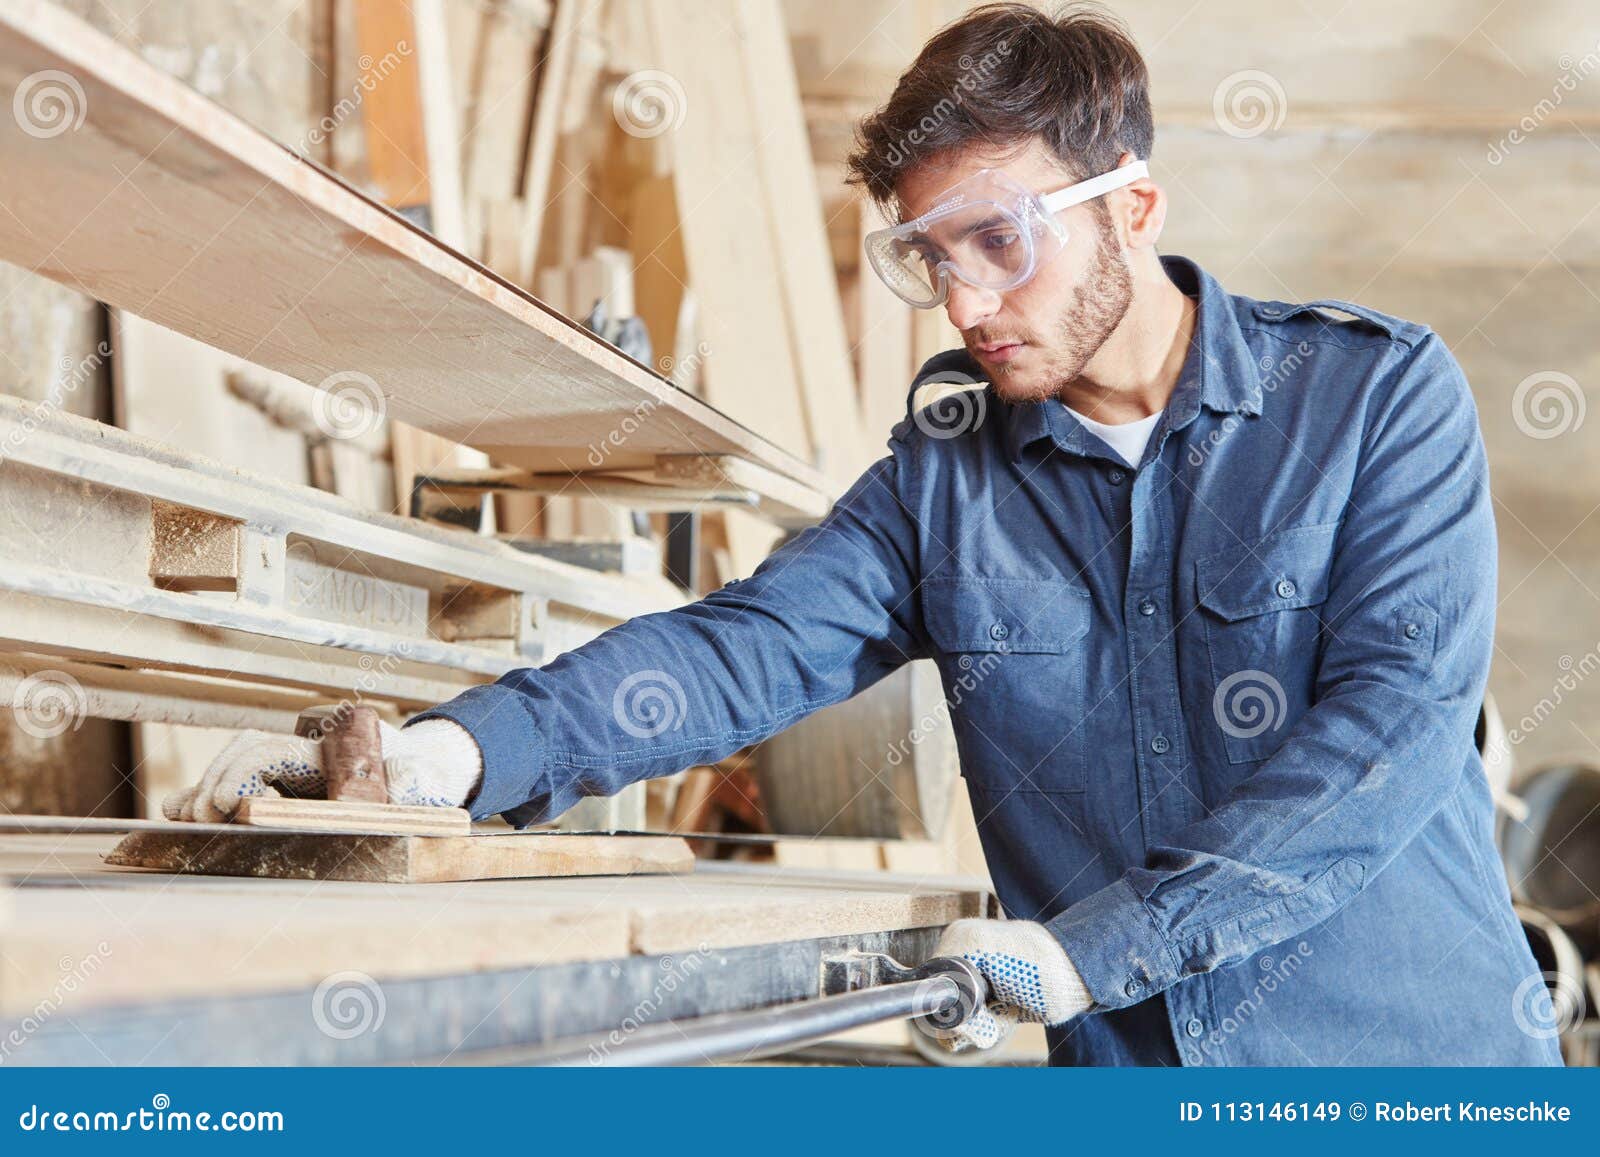 Carpentry Apprentice With Belt Sander Stock Image - Image ...